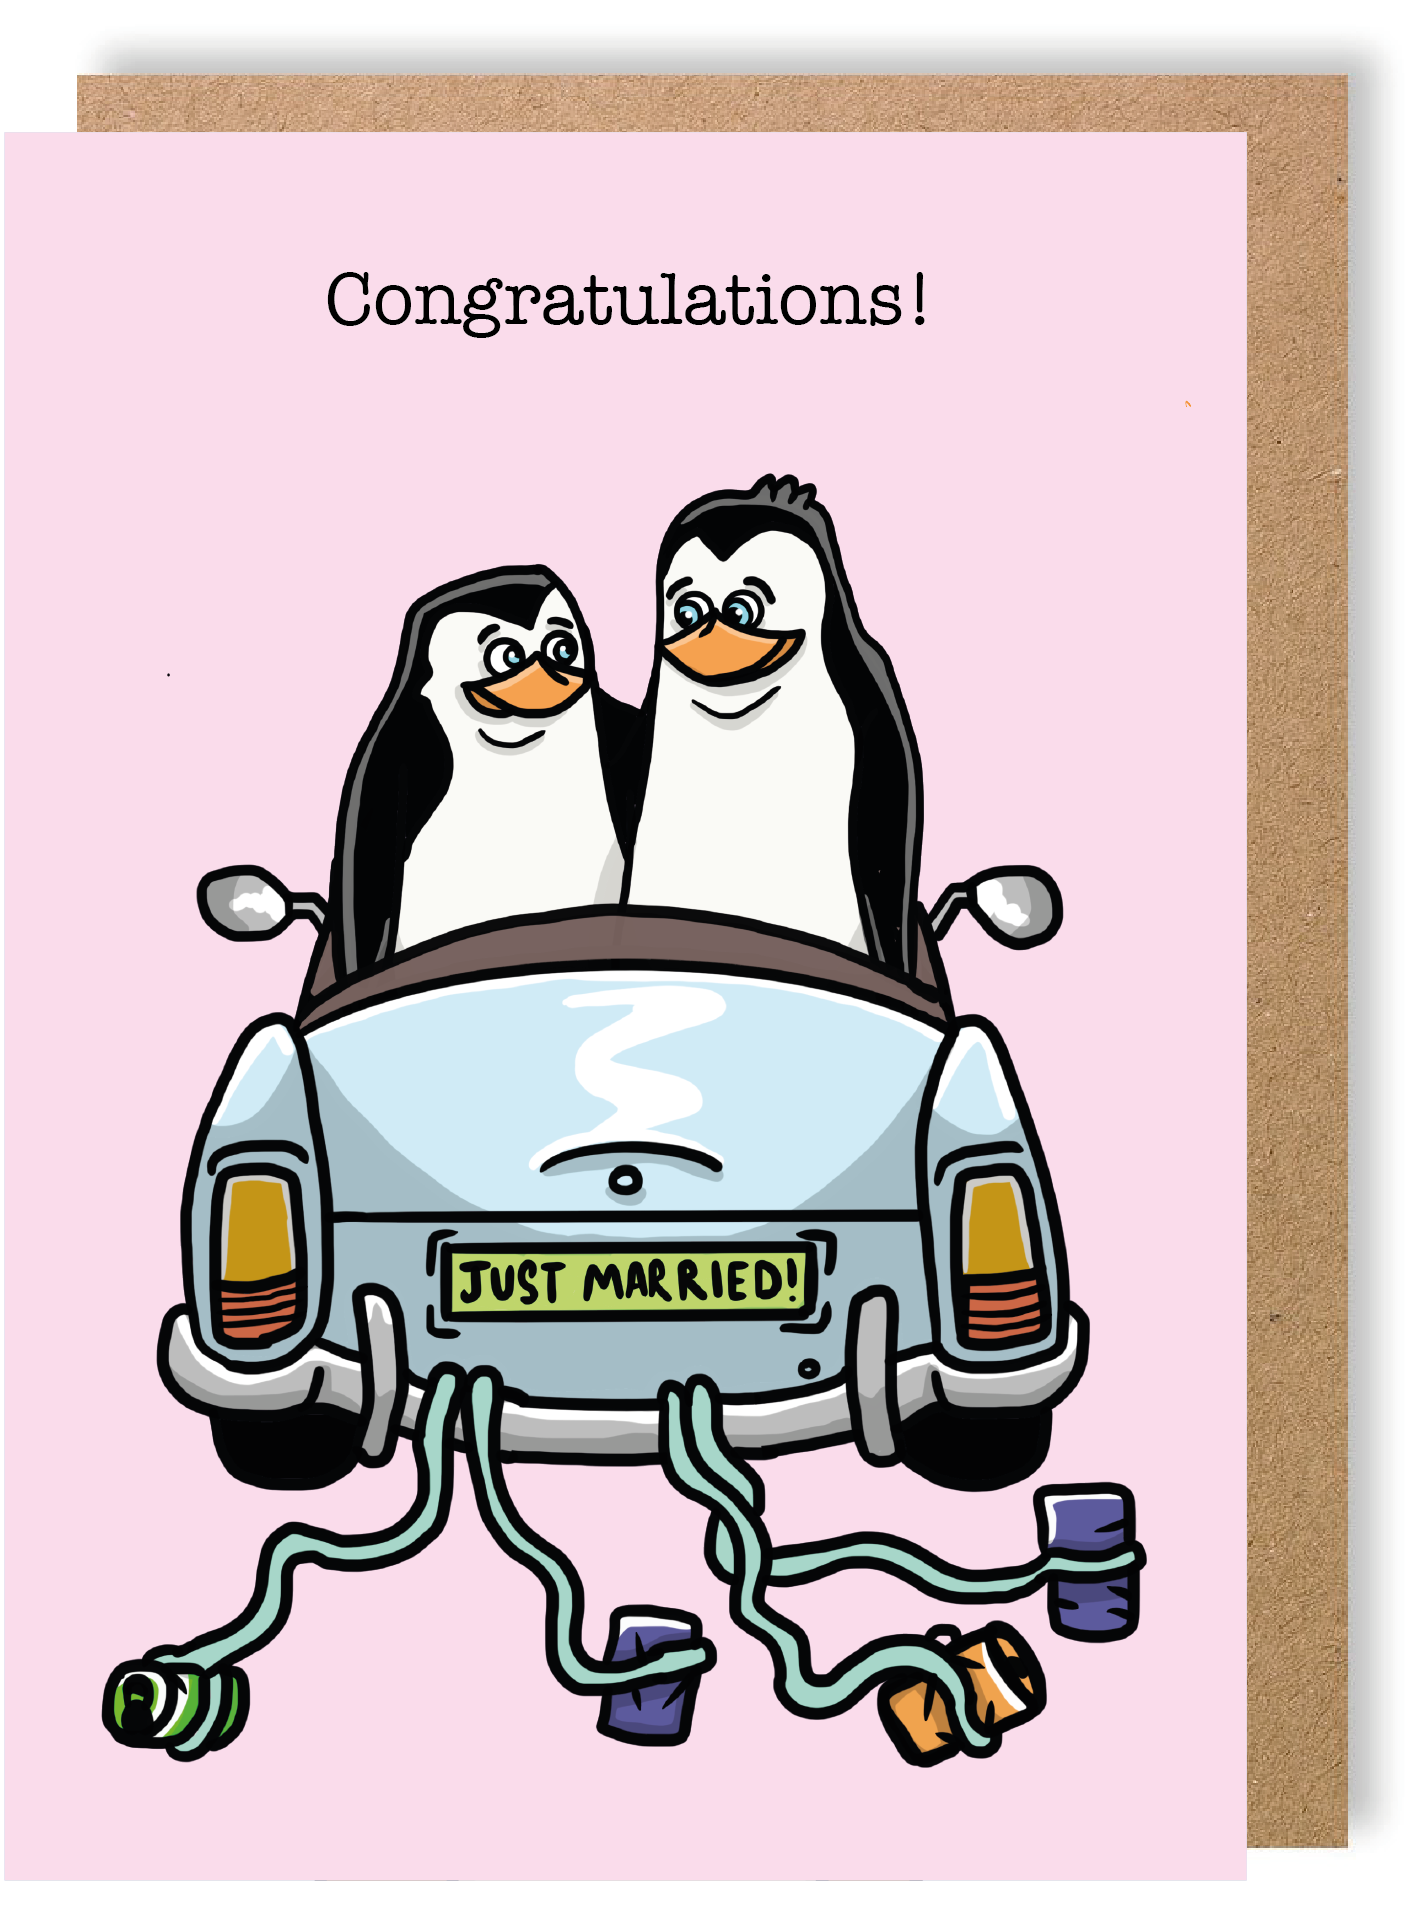 Congratulations, Just Married - Penguin - Greetings Card - LukeHorton Art